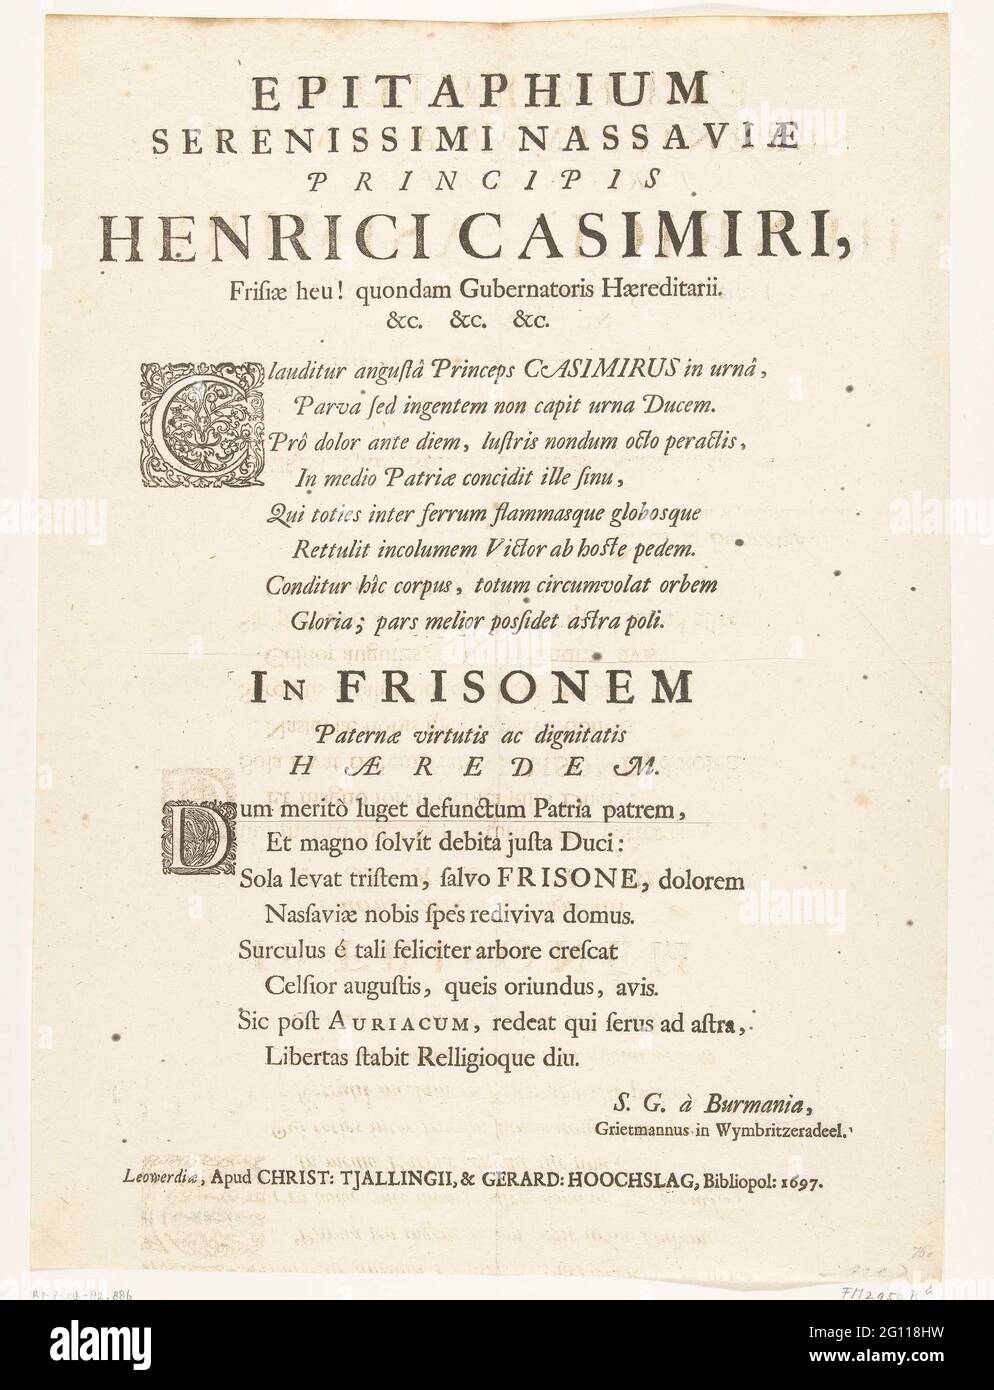 Epitaaf per Hendrik Casimir II, Conte di Nassau-Dietz, 1697; Epitaphium Serenissimi Nassauae Principis Henrici Casimiri, Frisiae Heu! Quondam Gubernatoris Haereditarii. Epitaaf per Hendrik Casimir II, Conte di Nassau-Dietz, Stadtholder di Frisia, morì il 25 marzo 1697. Con due versetti in latino di S.G. à Burmania. Foto Stock